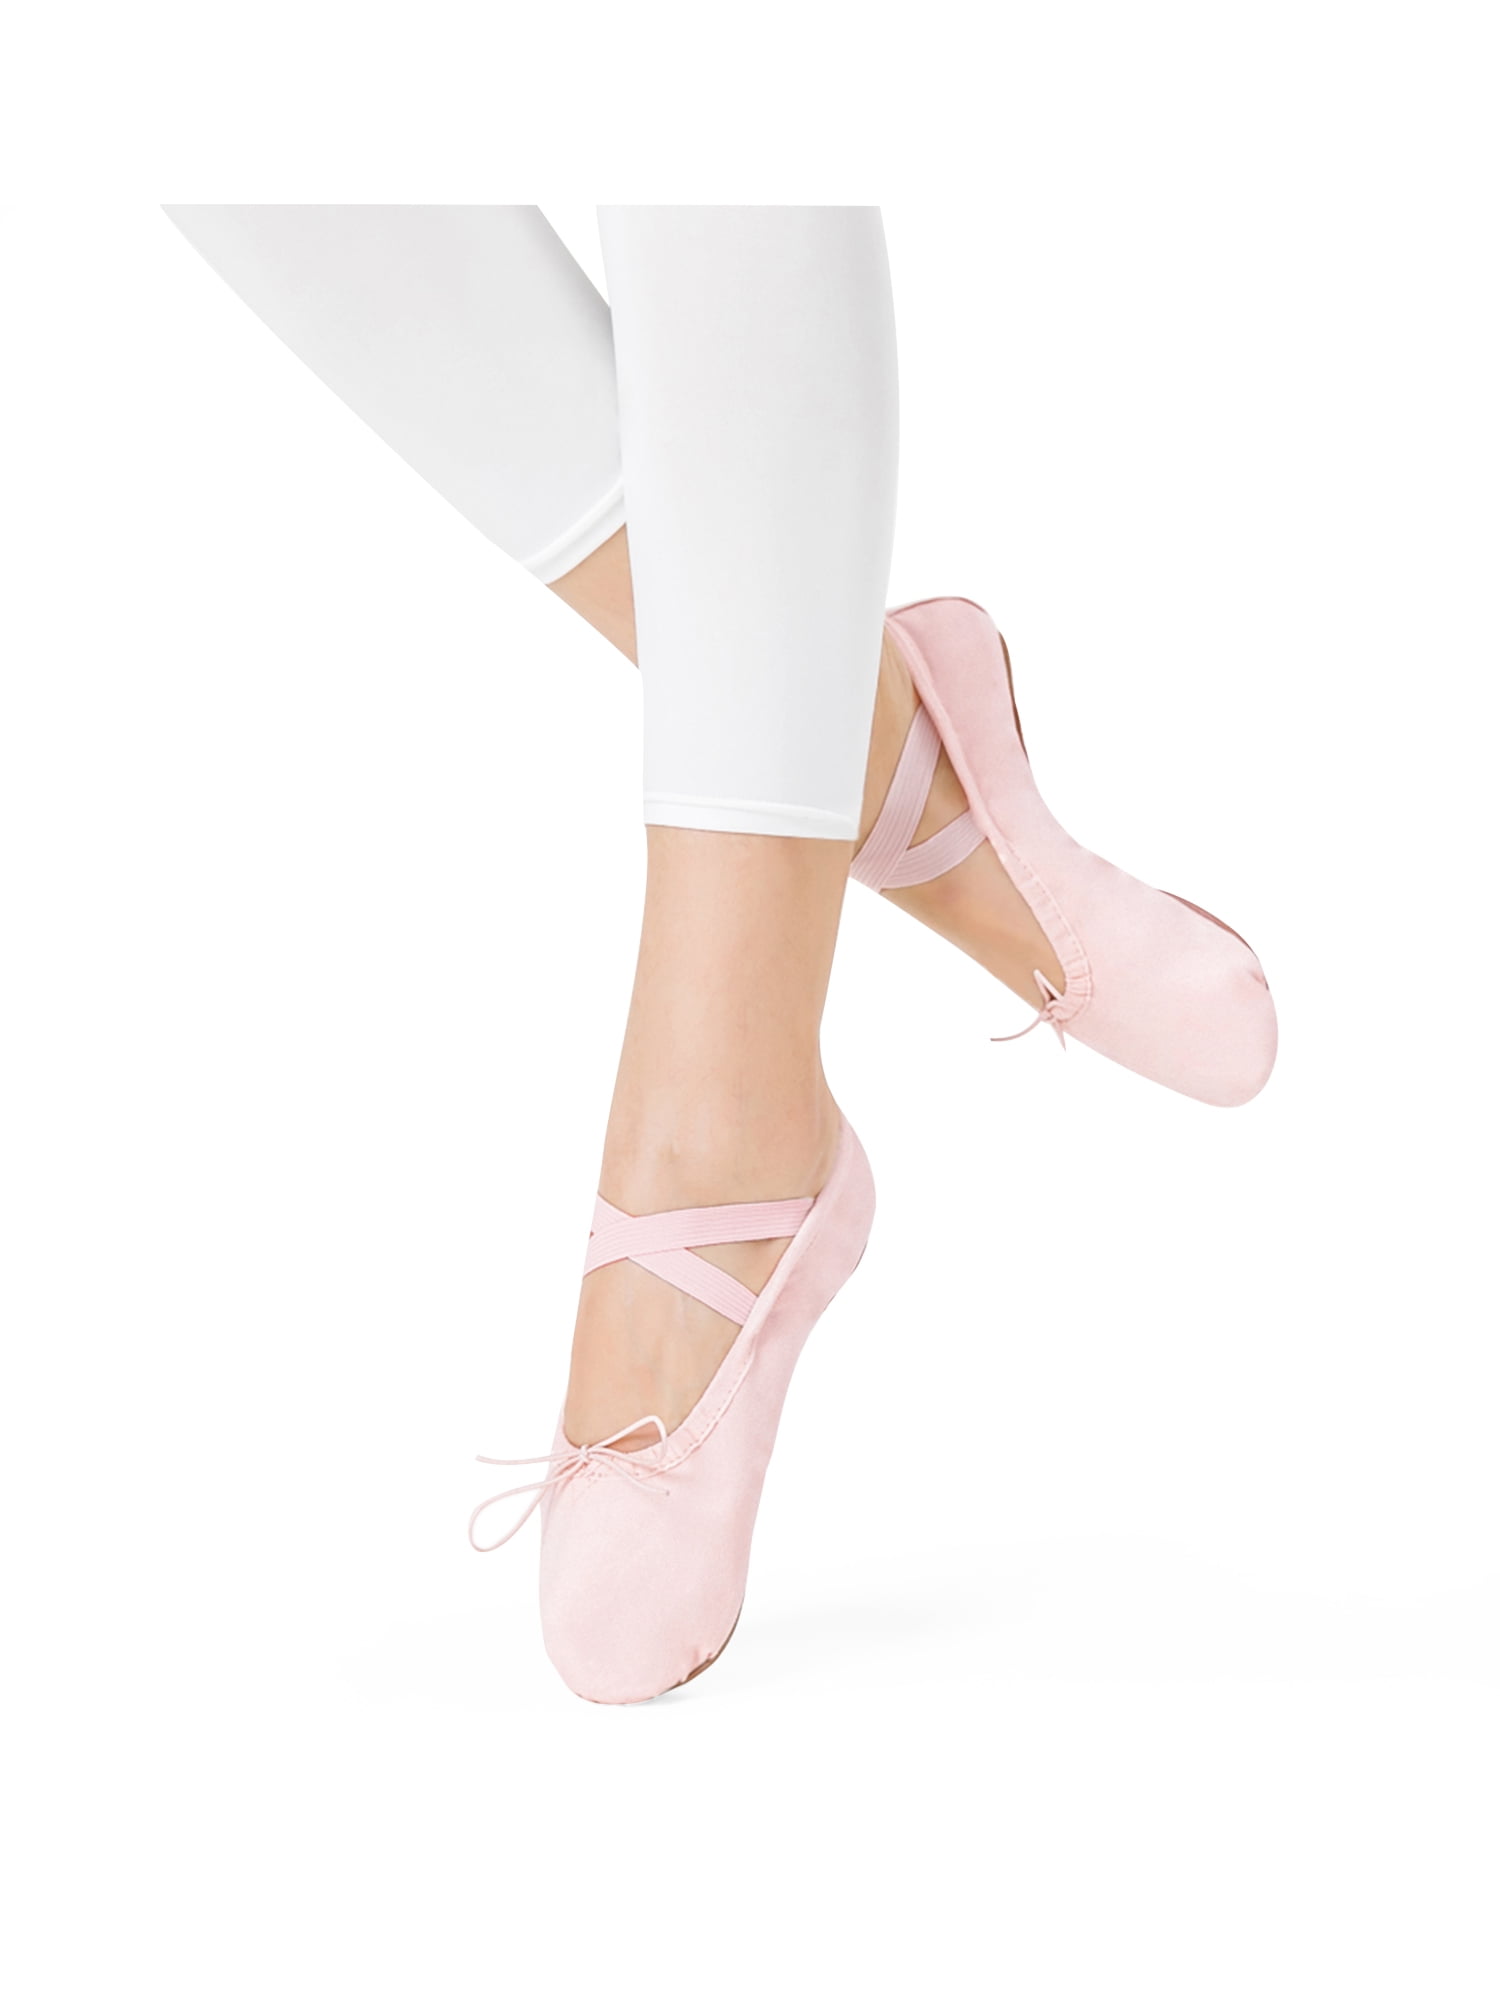 Girls Ballet Shoes Dance Shoes Canvas Ballet Slipper Split Leather Sole Yoga Gymnastic Shoes for Toddlers Kids Children Women 